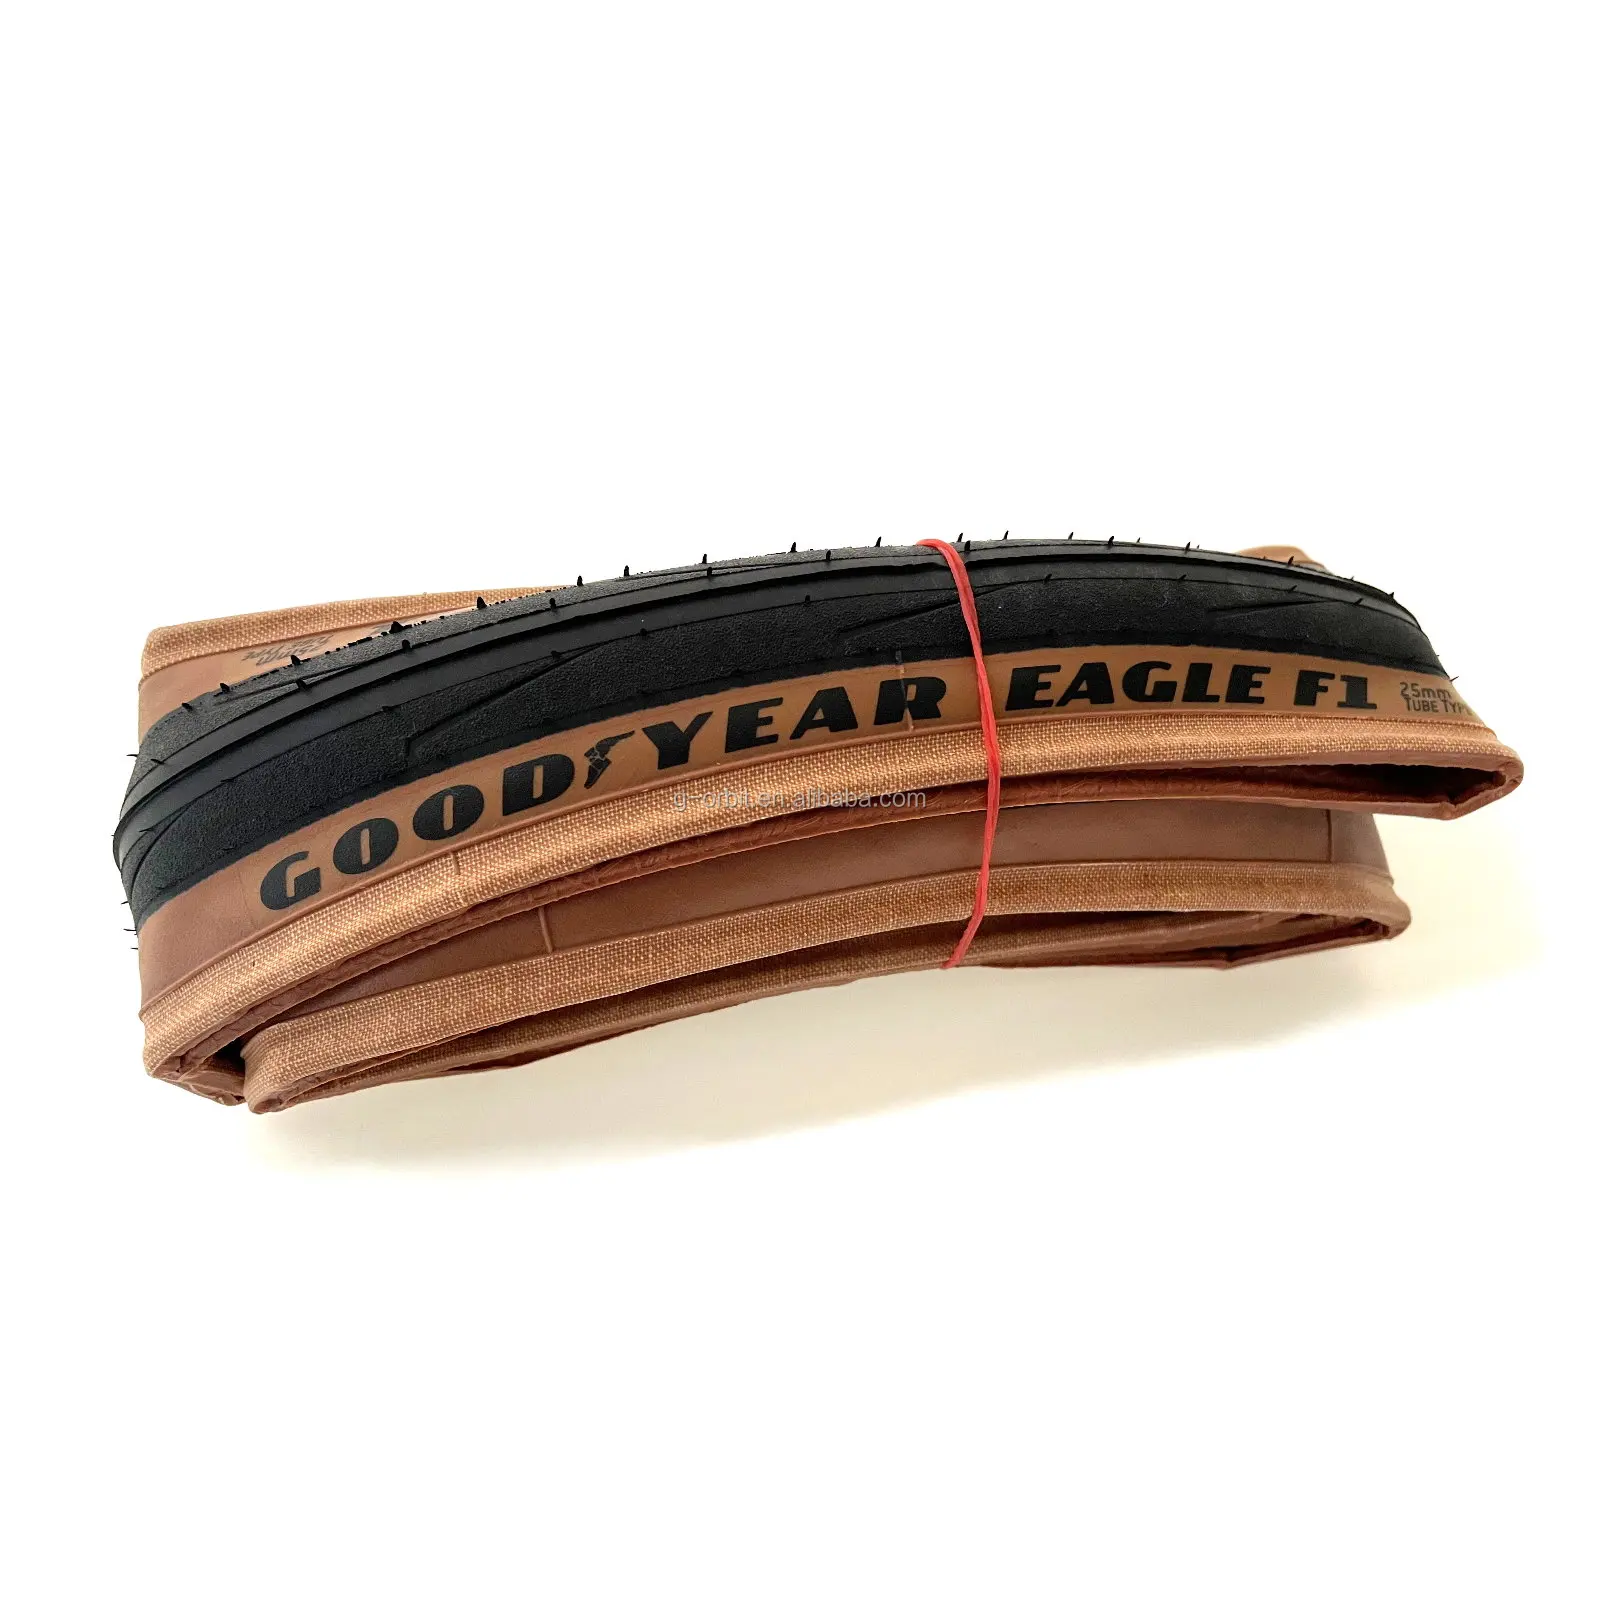 GoodYear Eagle F1 700x25c Road Tube-Type Foldable Clincher Tyre  Black/Skinwall